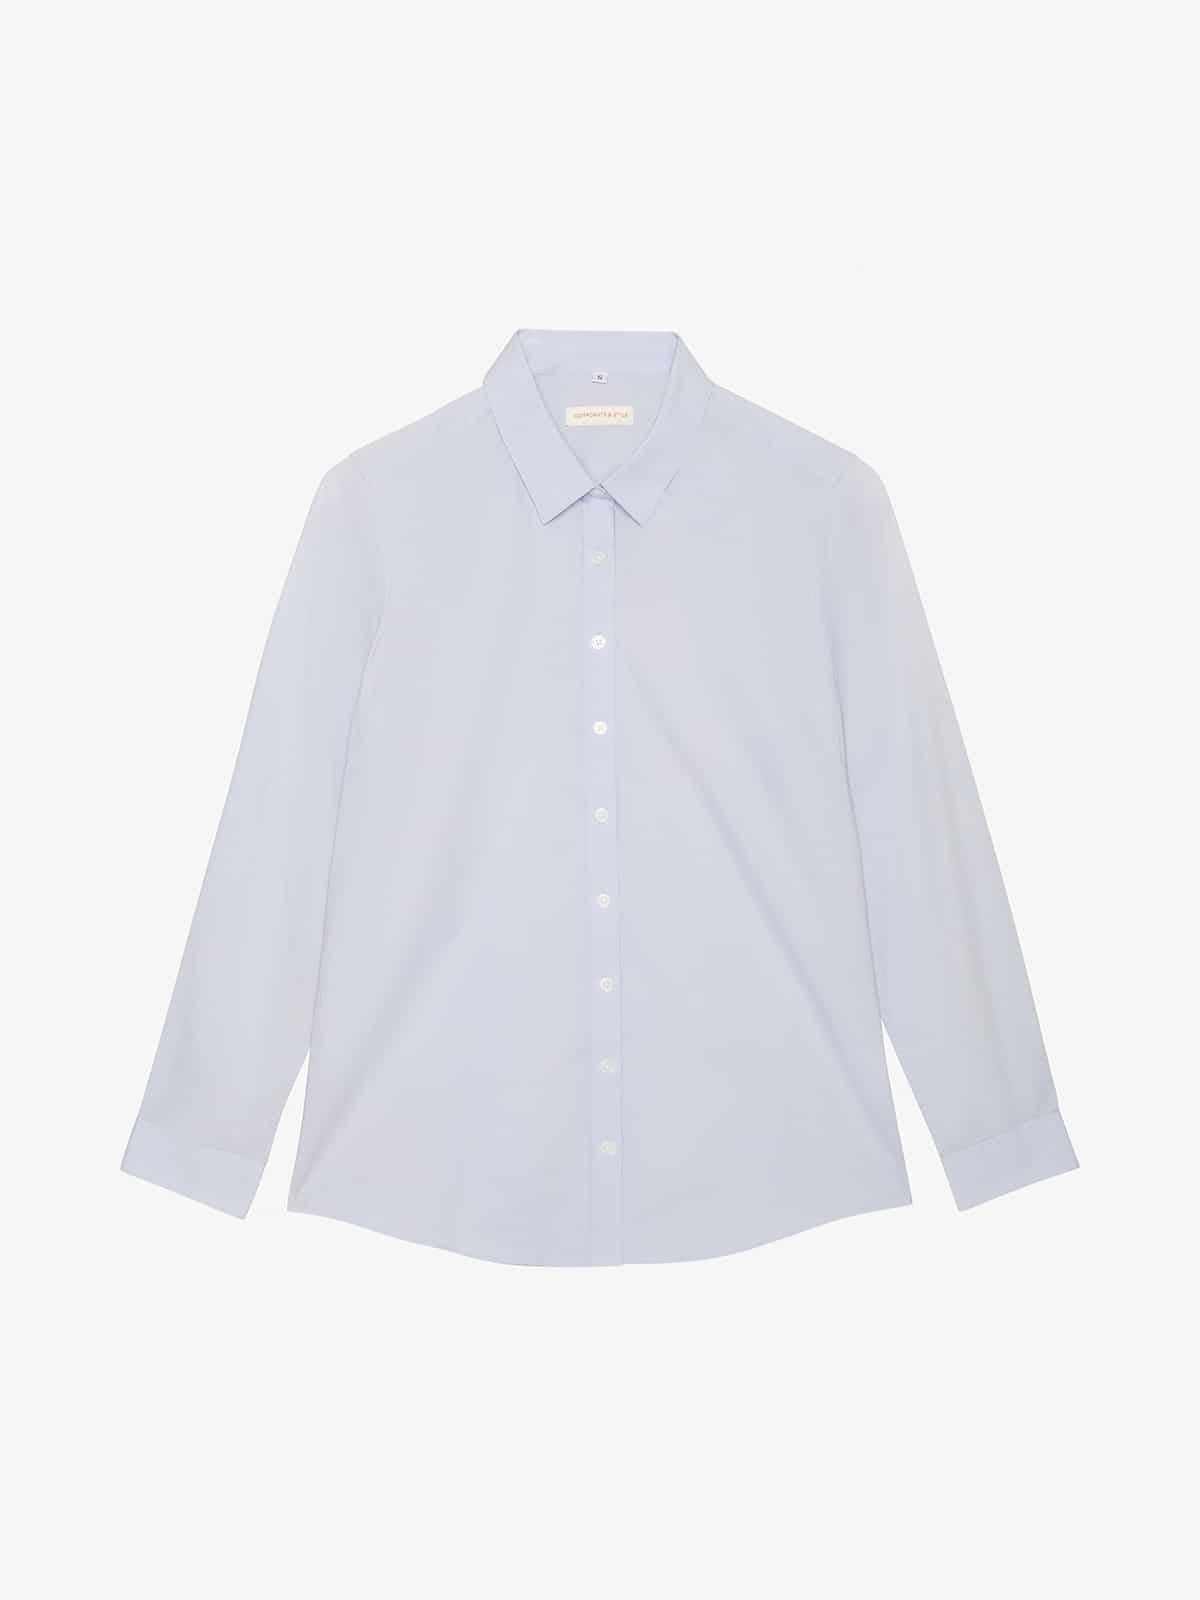 Ladies' Long Sleeve Shirt (Light Blue) - WEARSHIFT